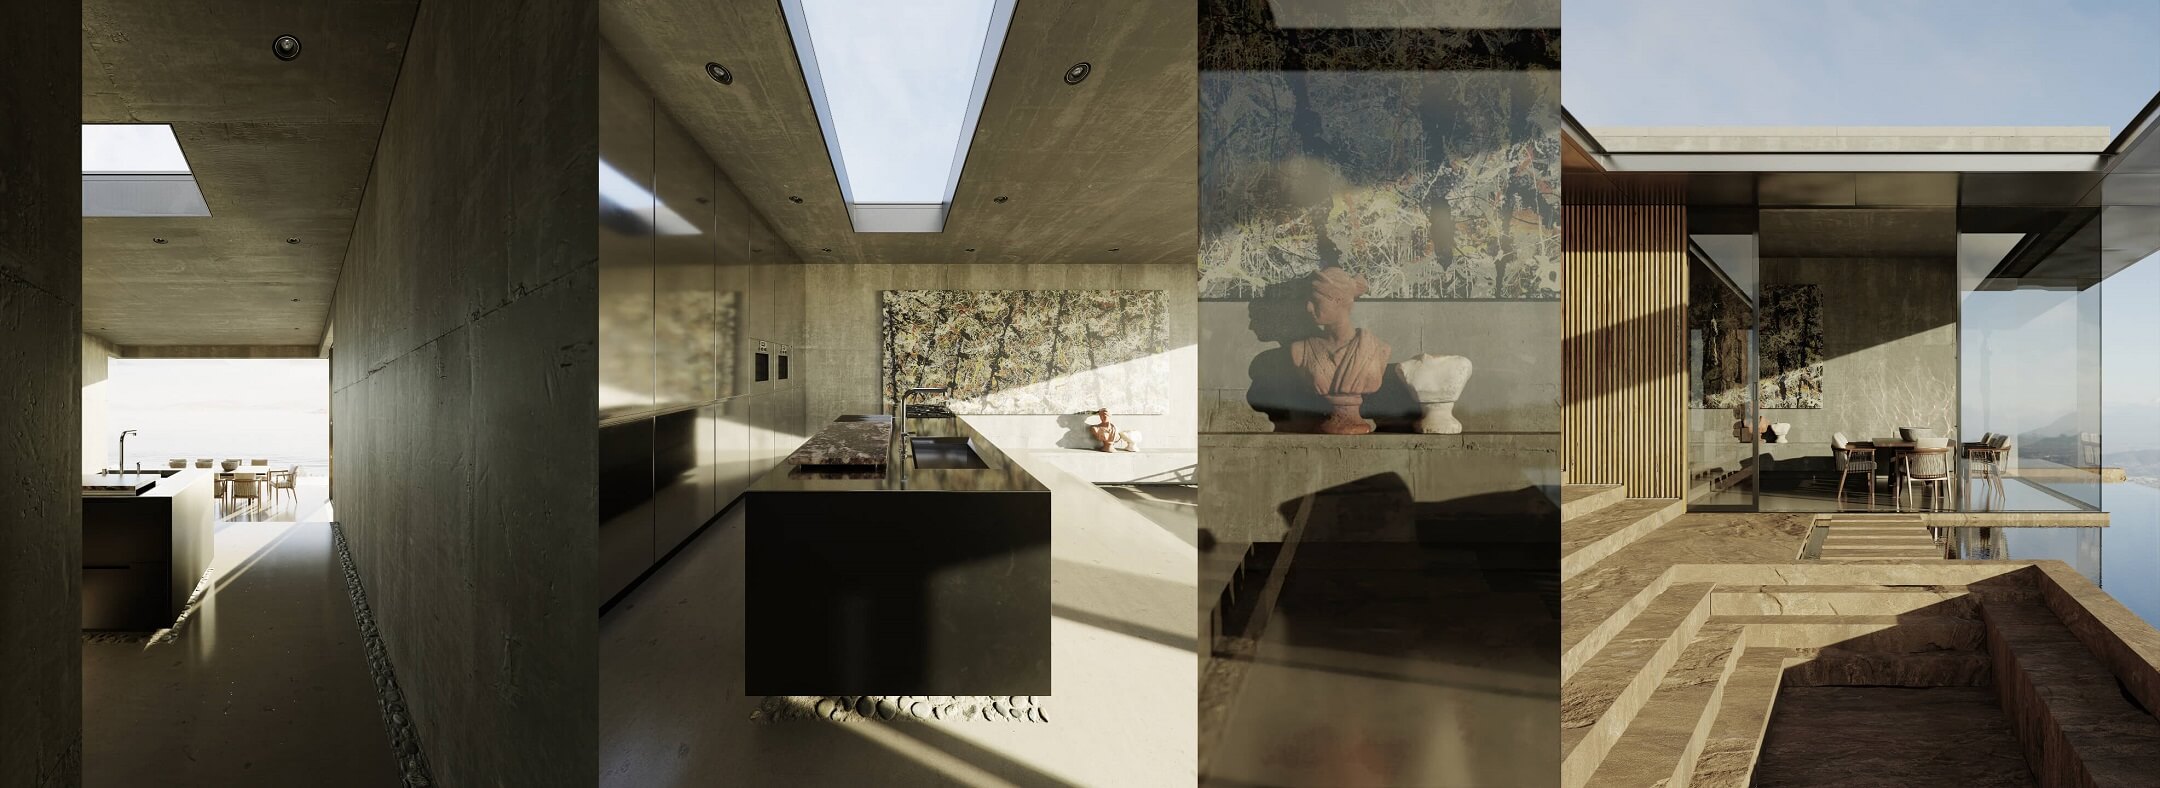 Intermediate CGI for Residence Interiors